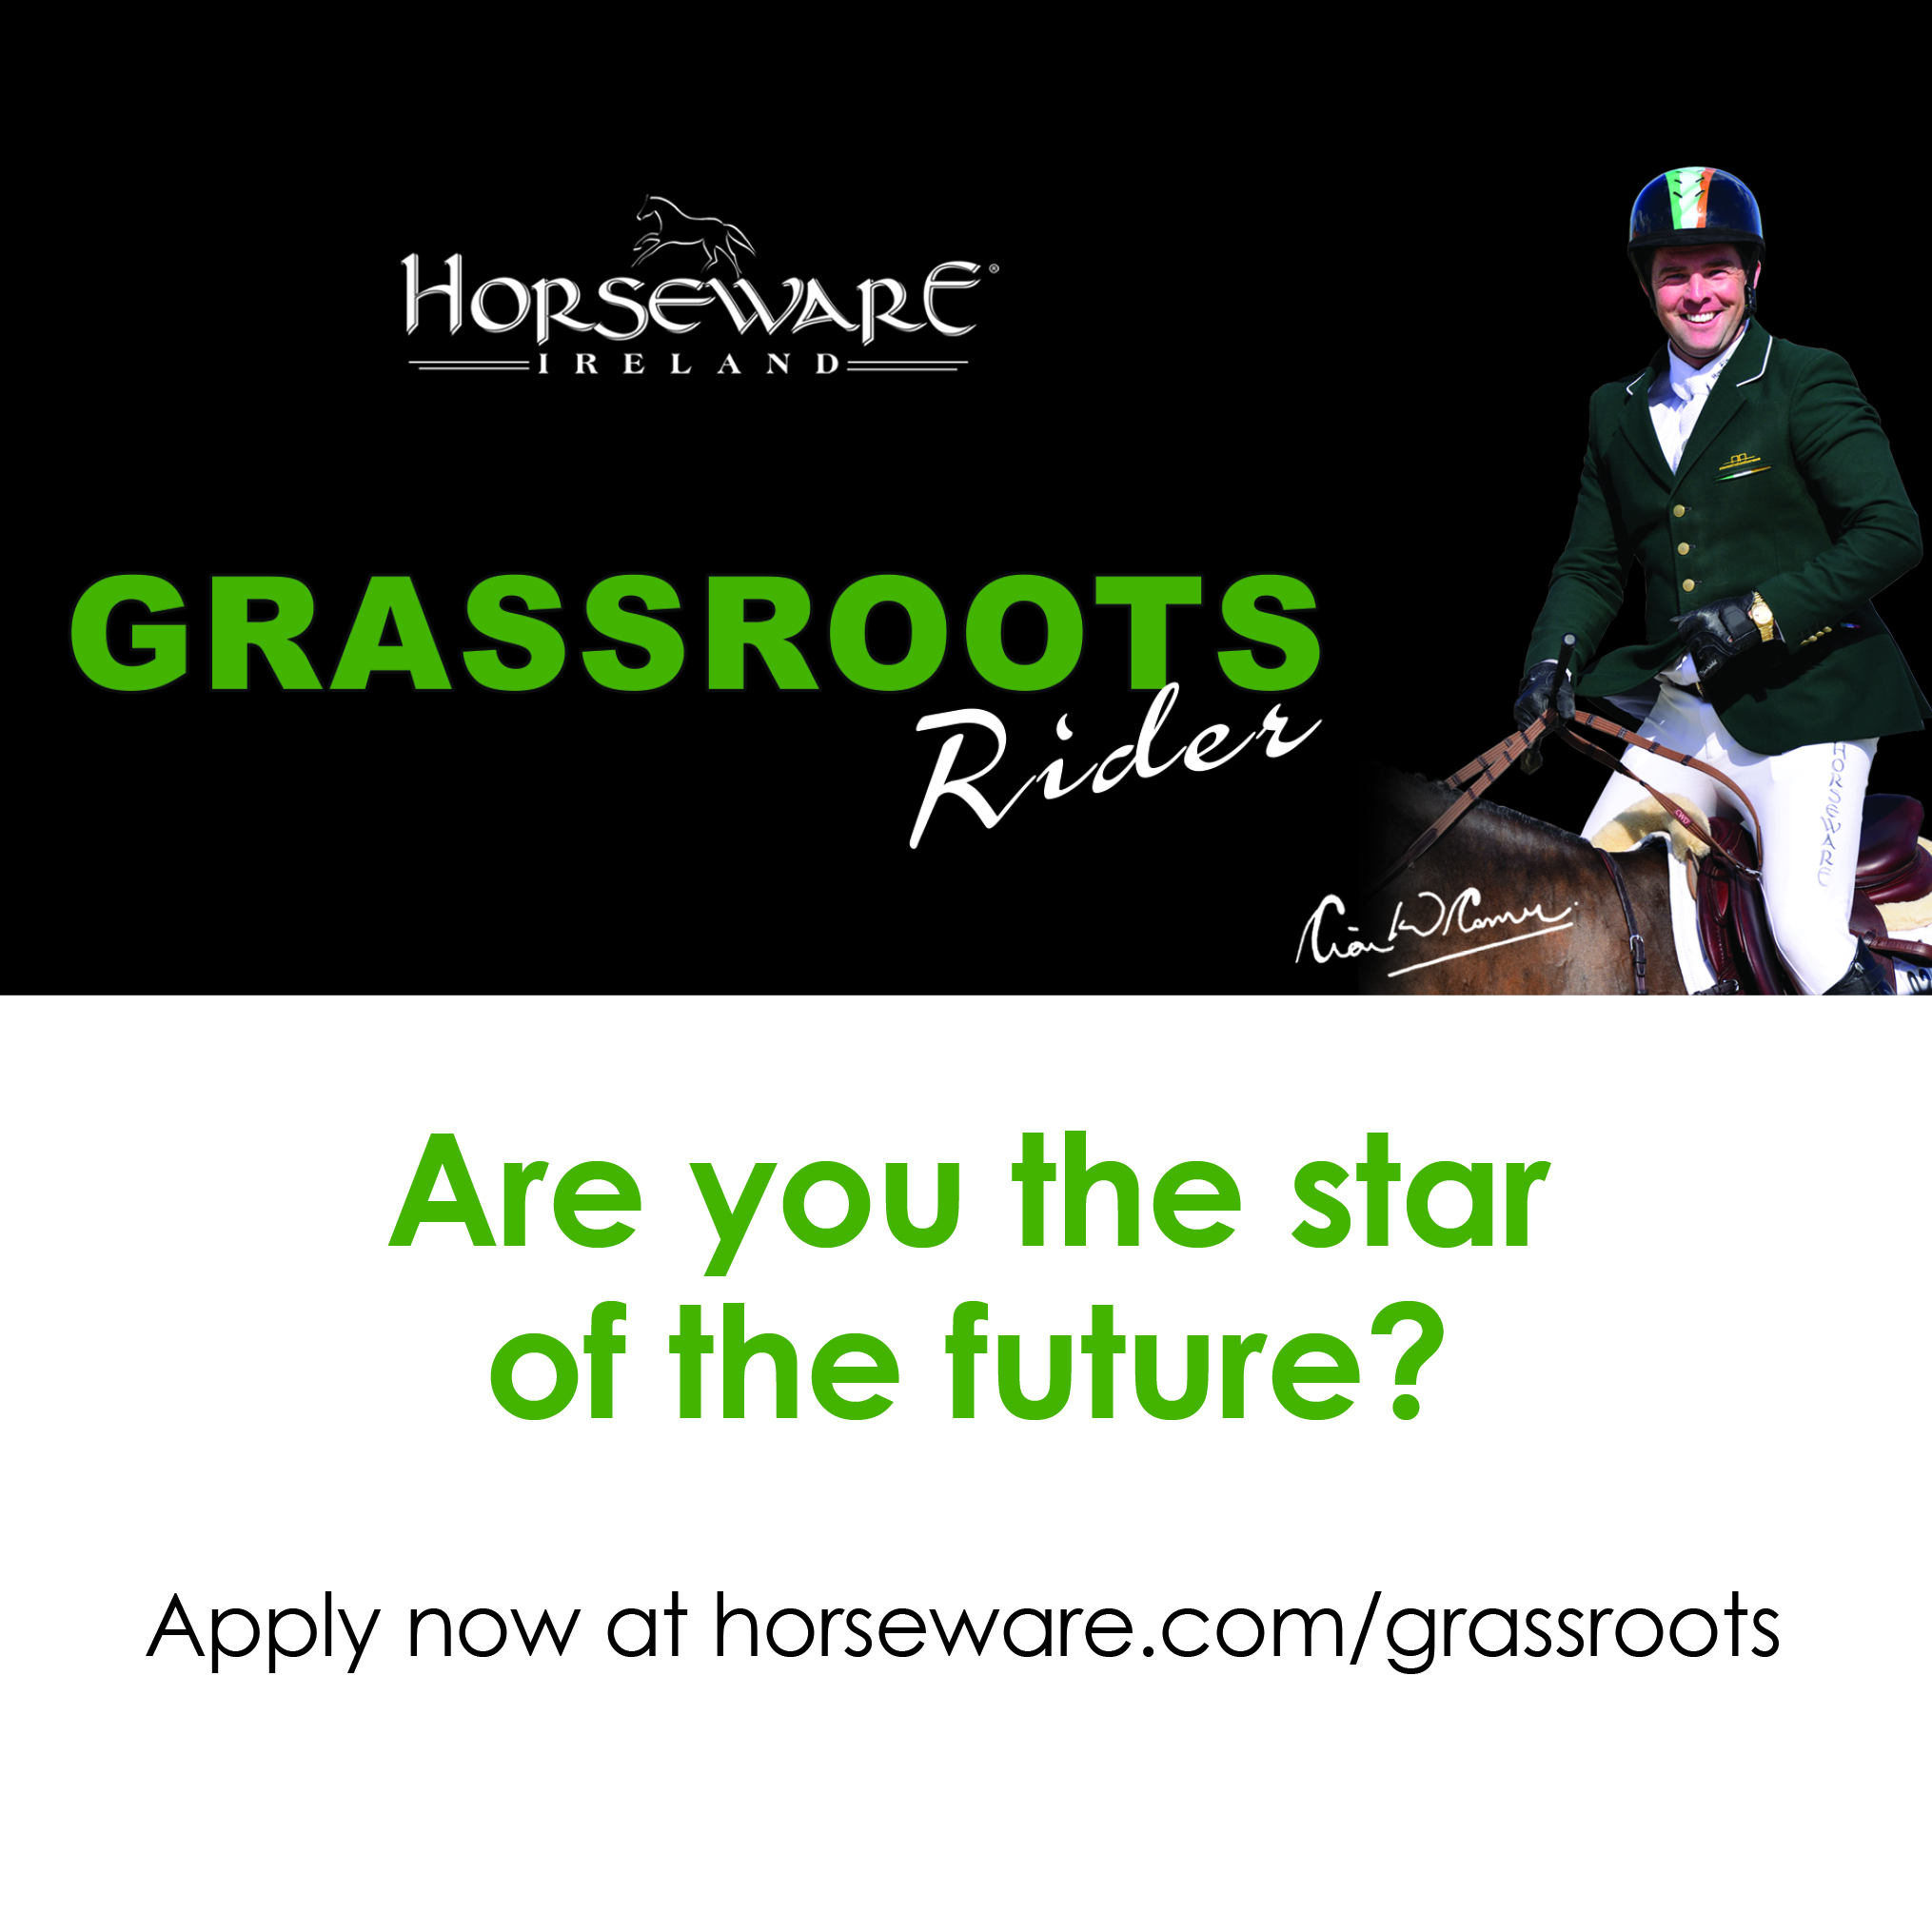 Horseware offers grassroots sponsorship.